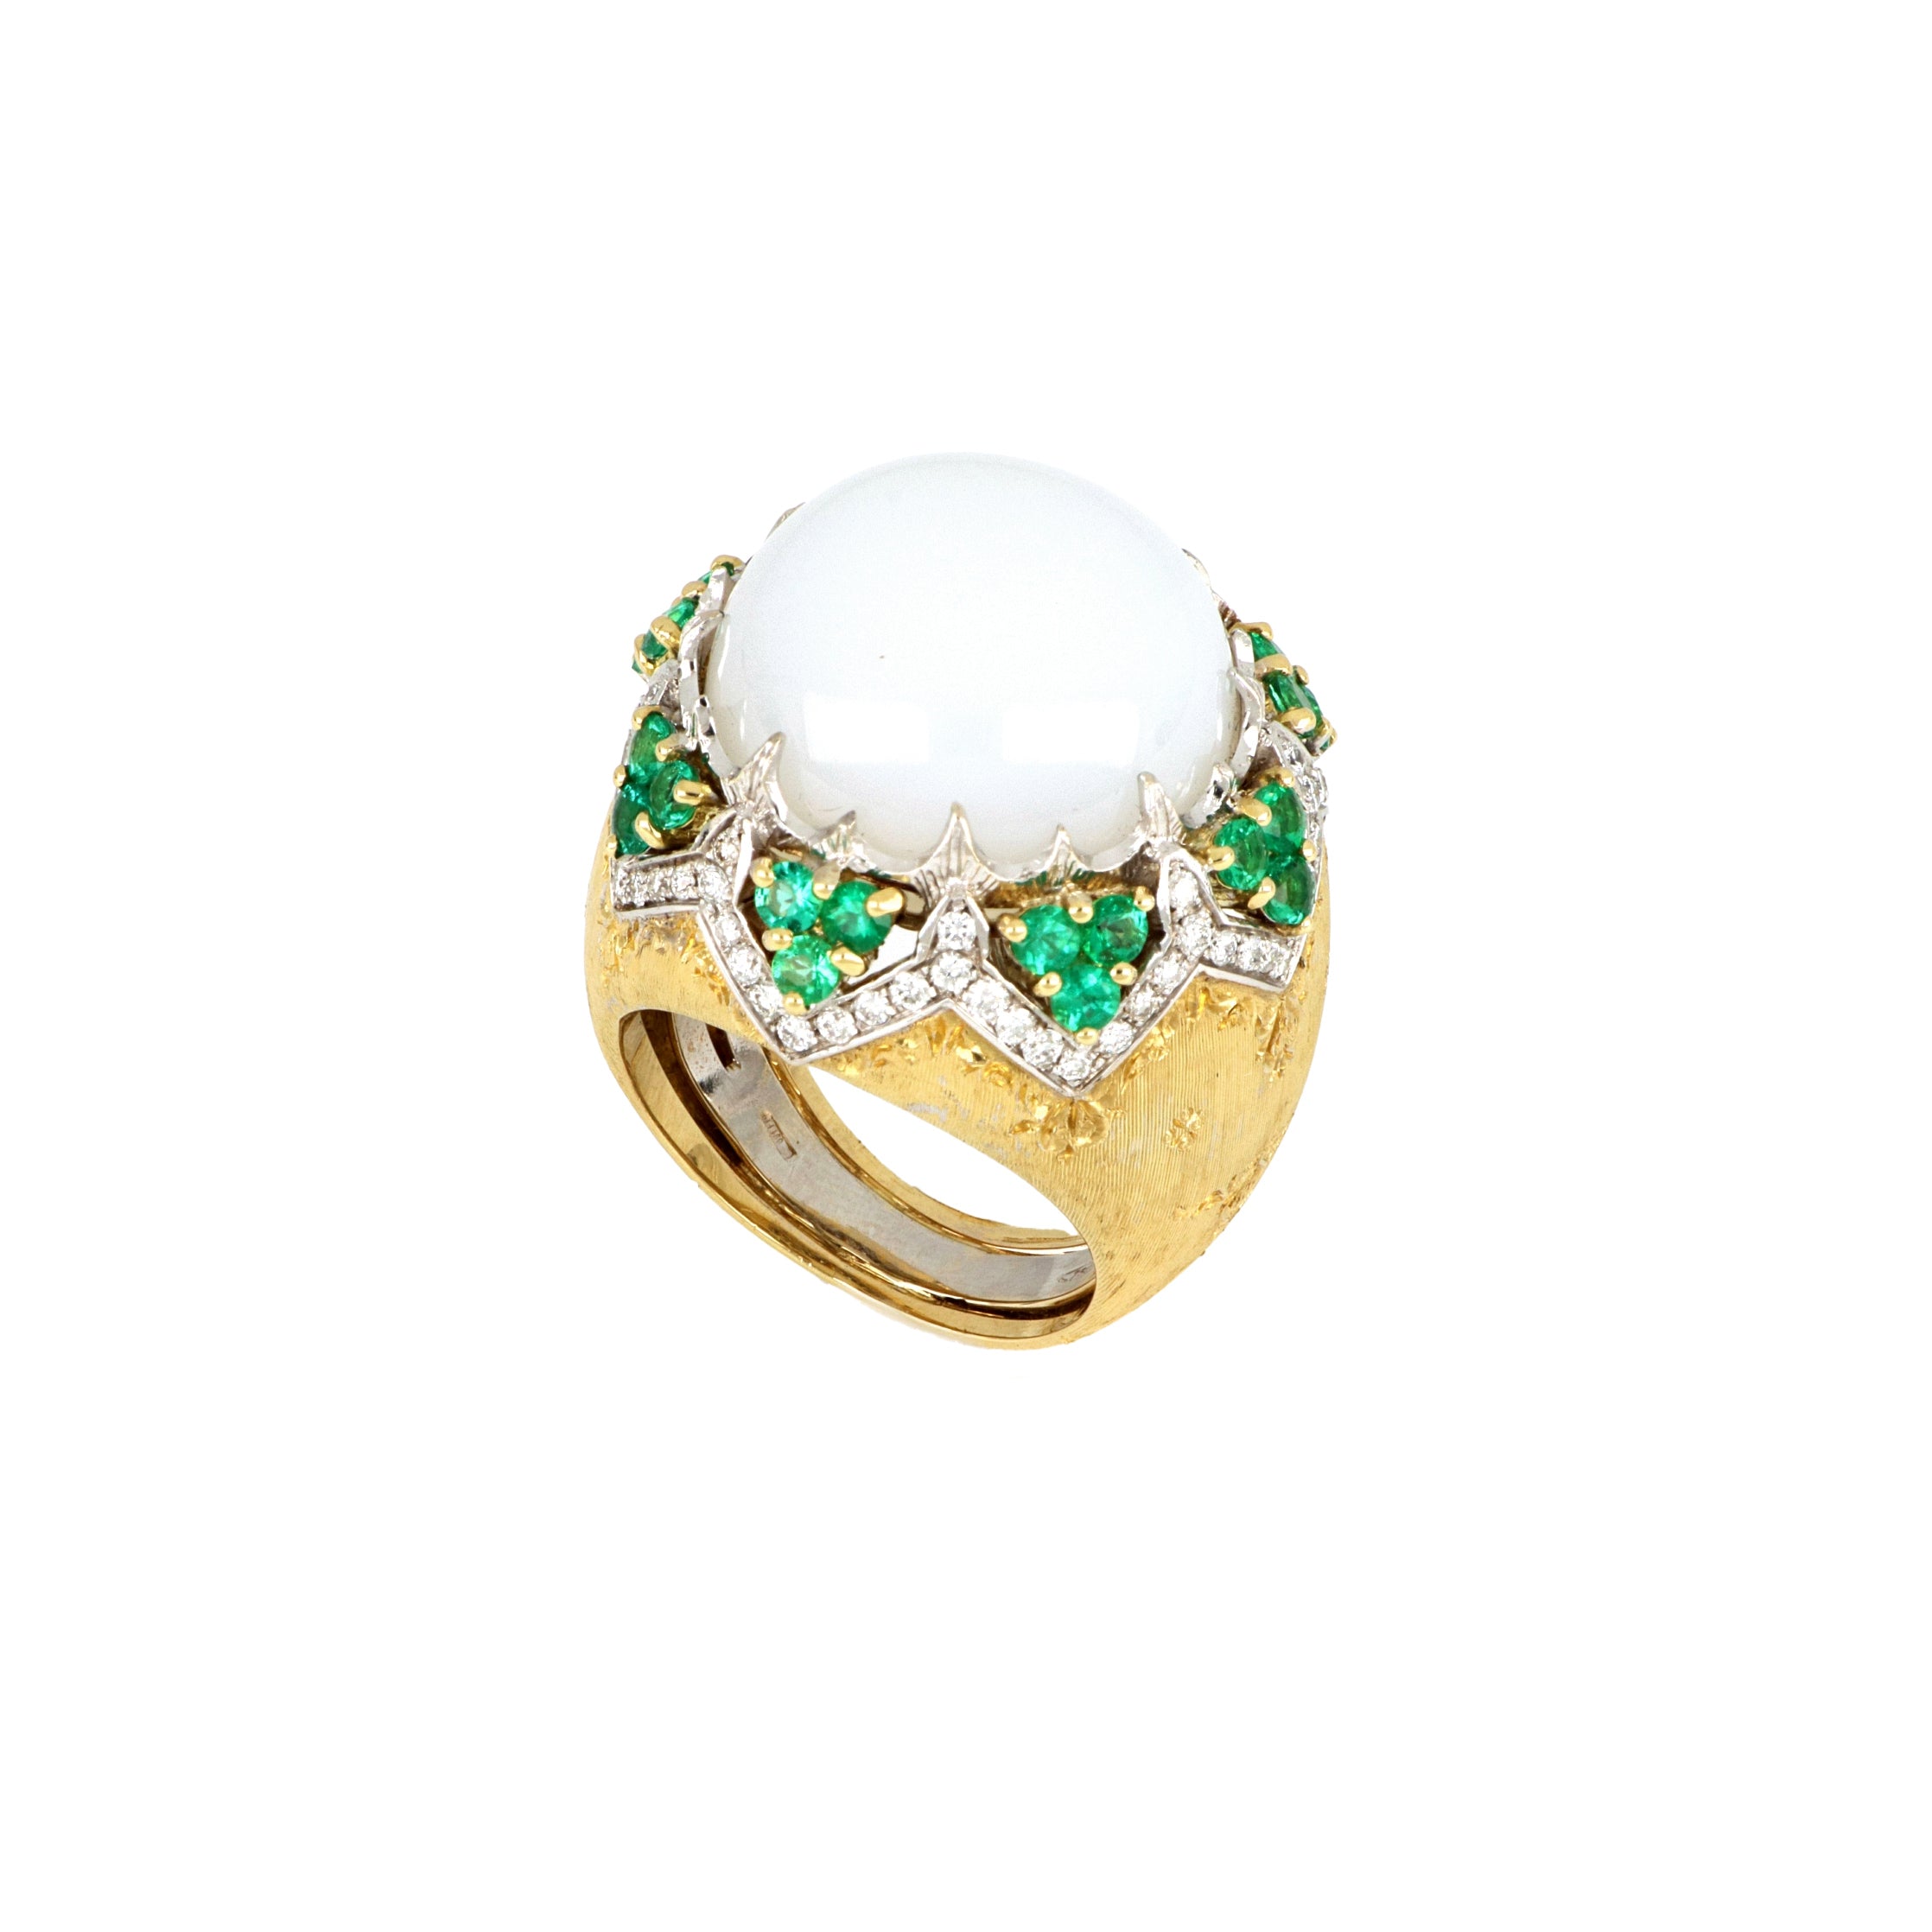 Moonstone, Diamonds And Emerald Ring